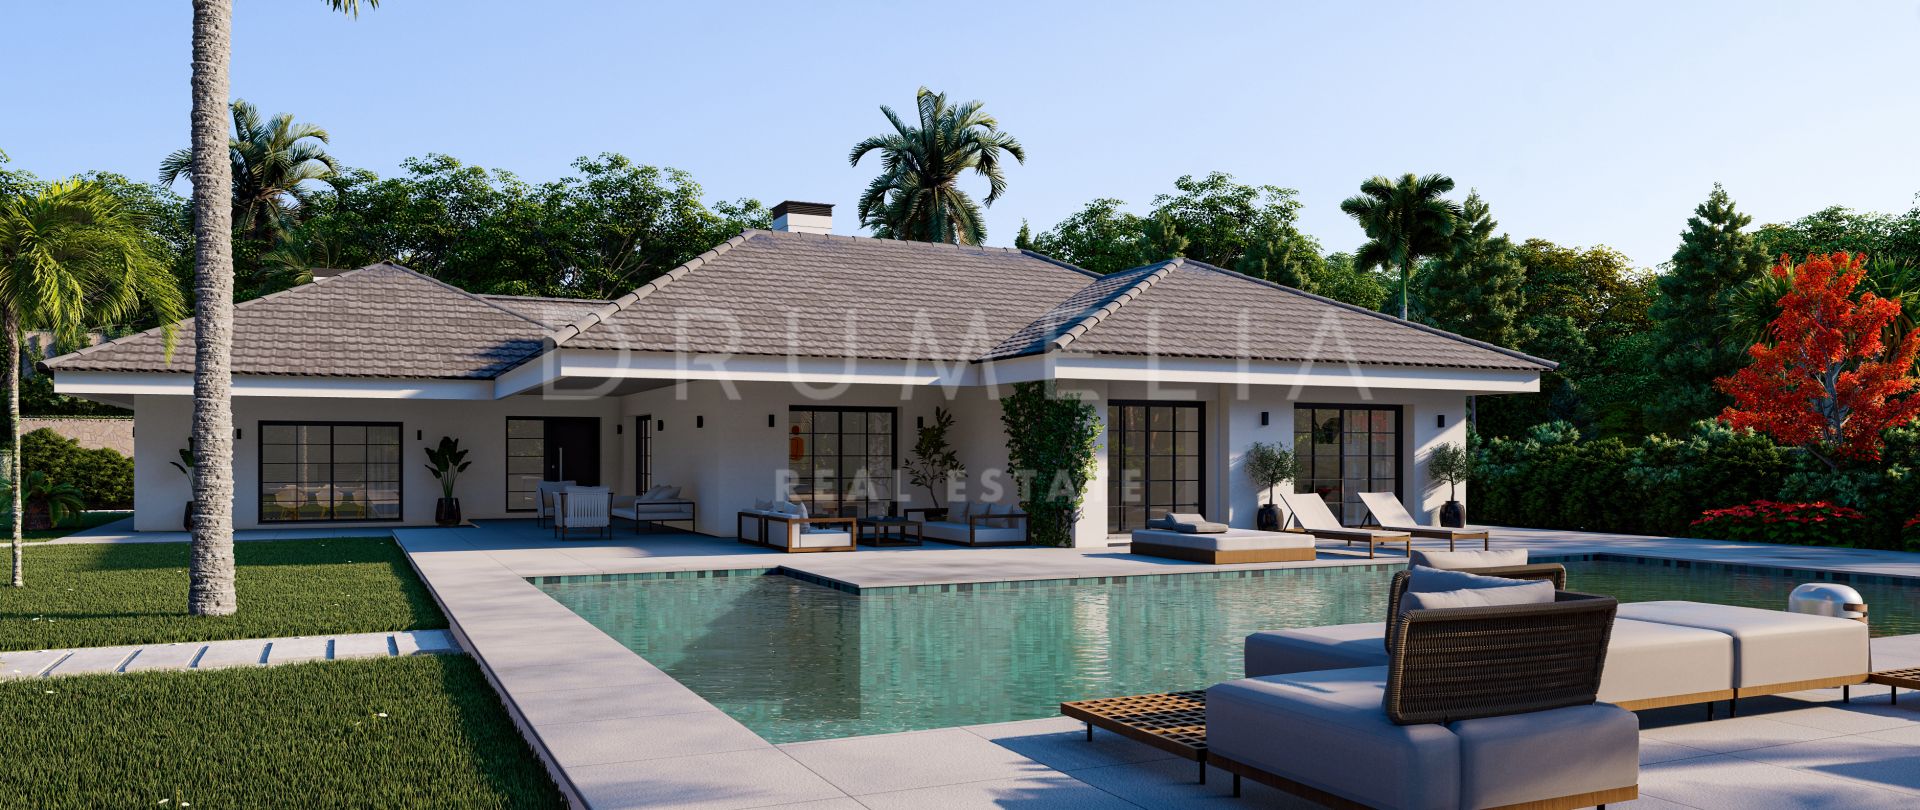 Charmante gerenoveerde luxe villa met tennisbaan en zwembad in El Real Panorama, Marbella Oost